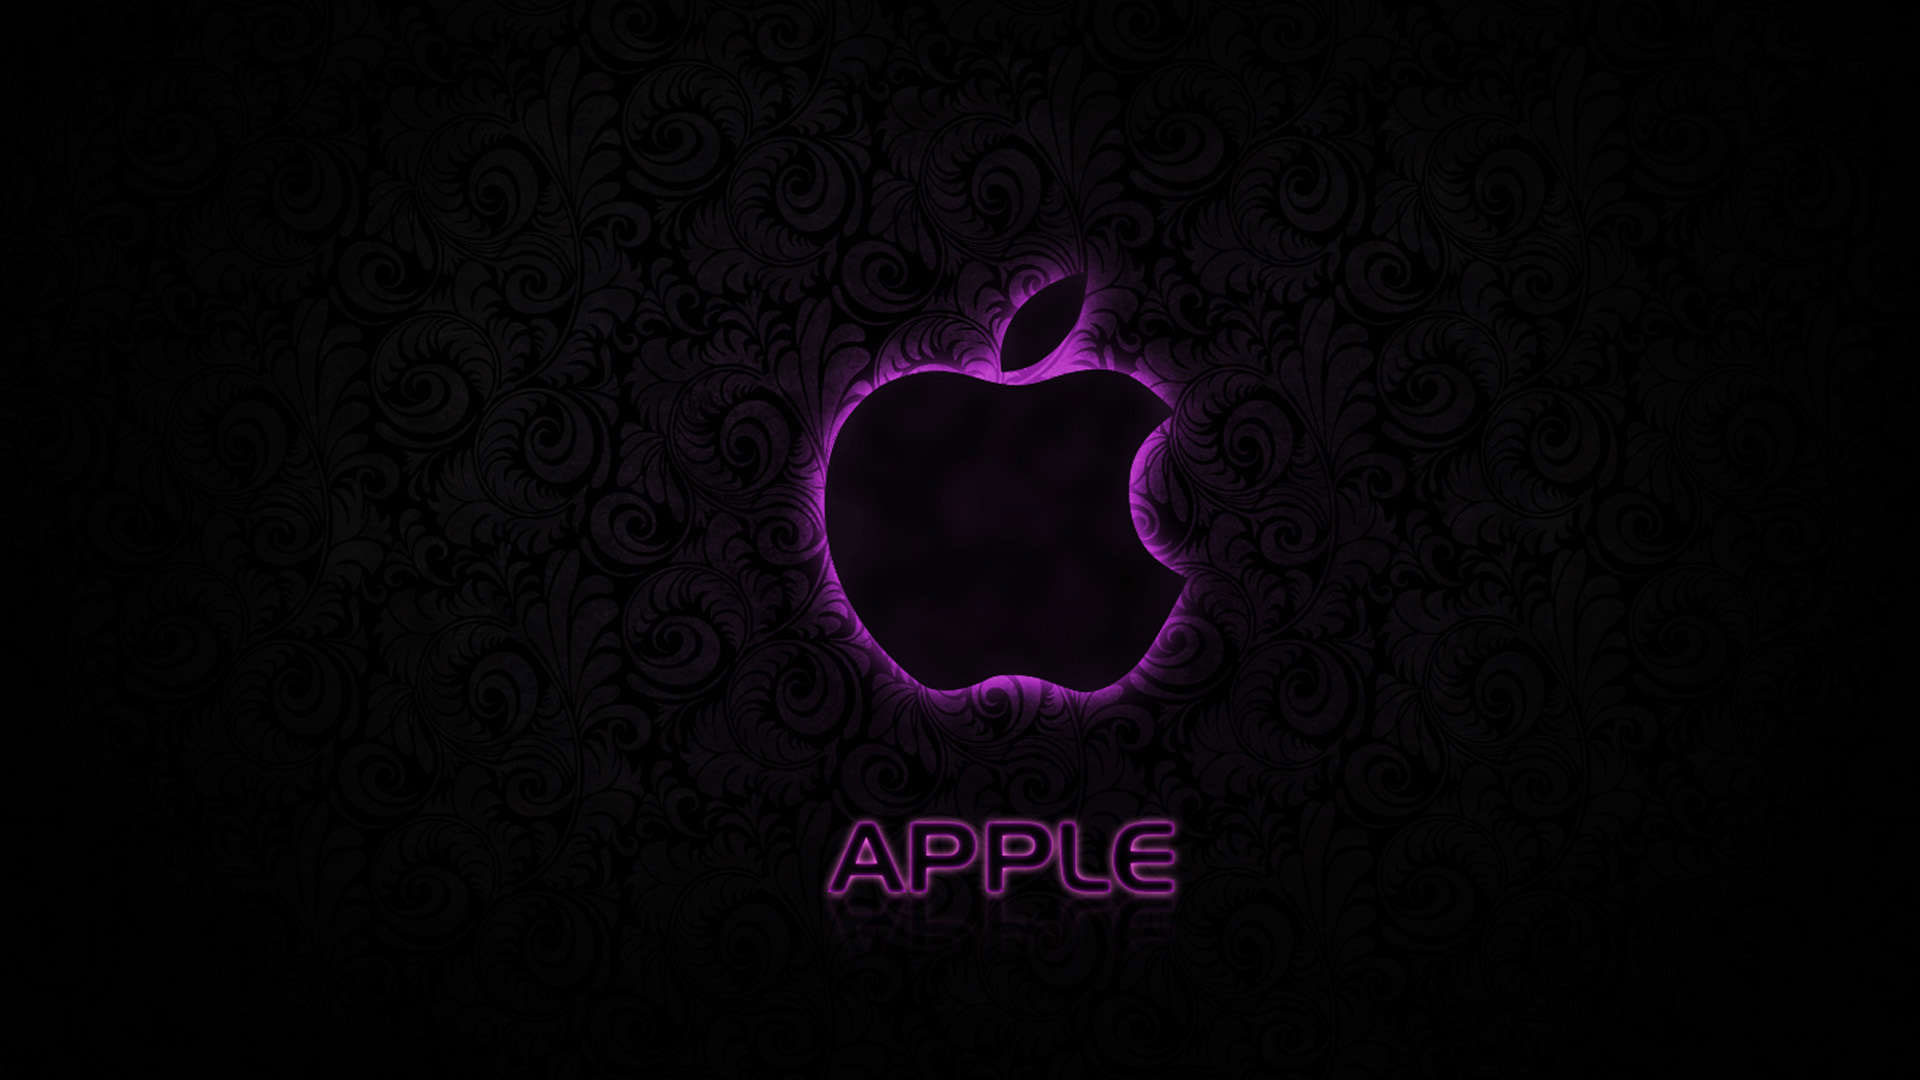 1920x1080 hd pics photos nice apple logo dark neon purple hd quality desktop  background wallpaper